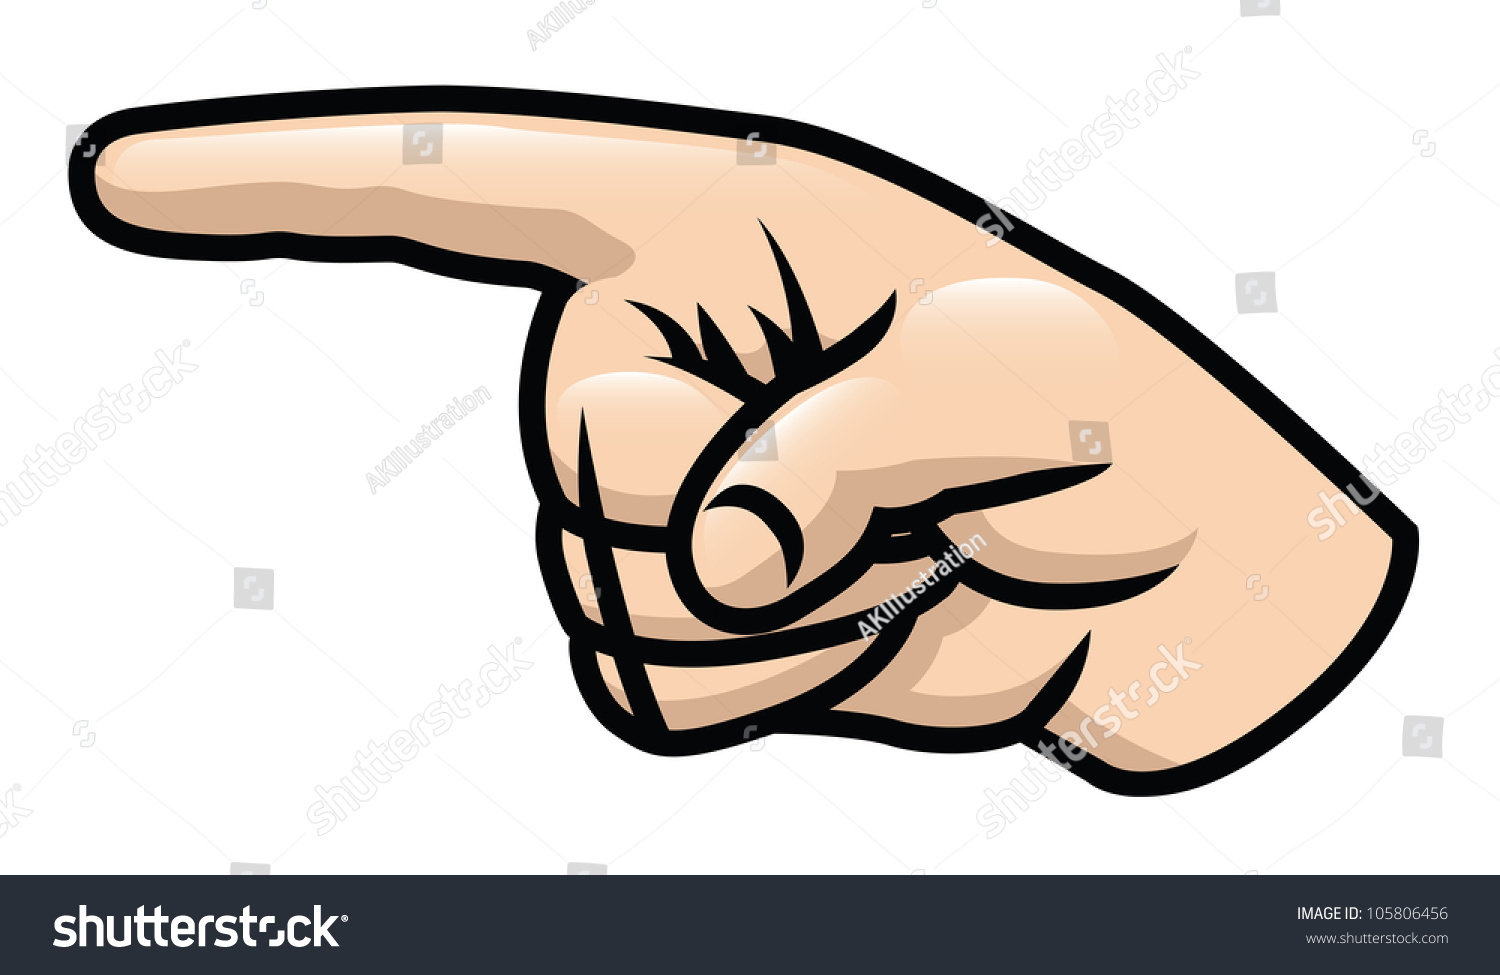 Illustration Of A Cartoon Hand Pointing. Raster. - 105806456 : Shutterstock